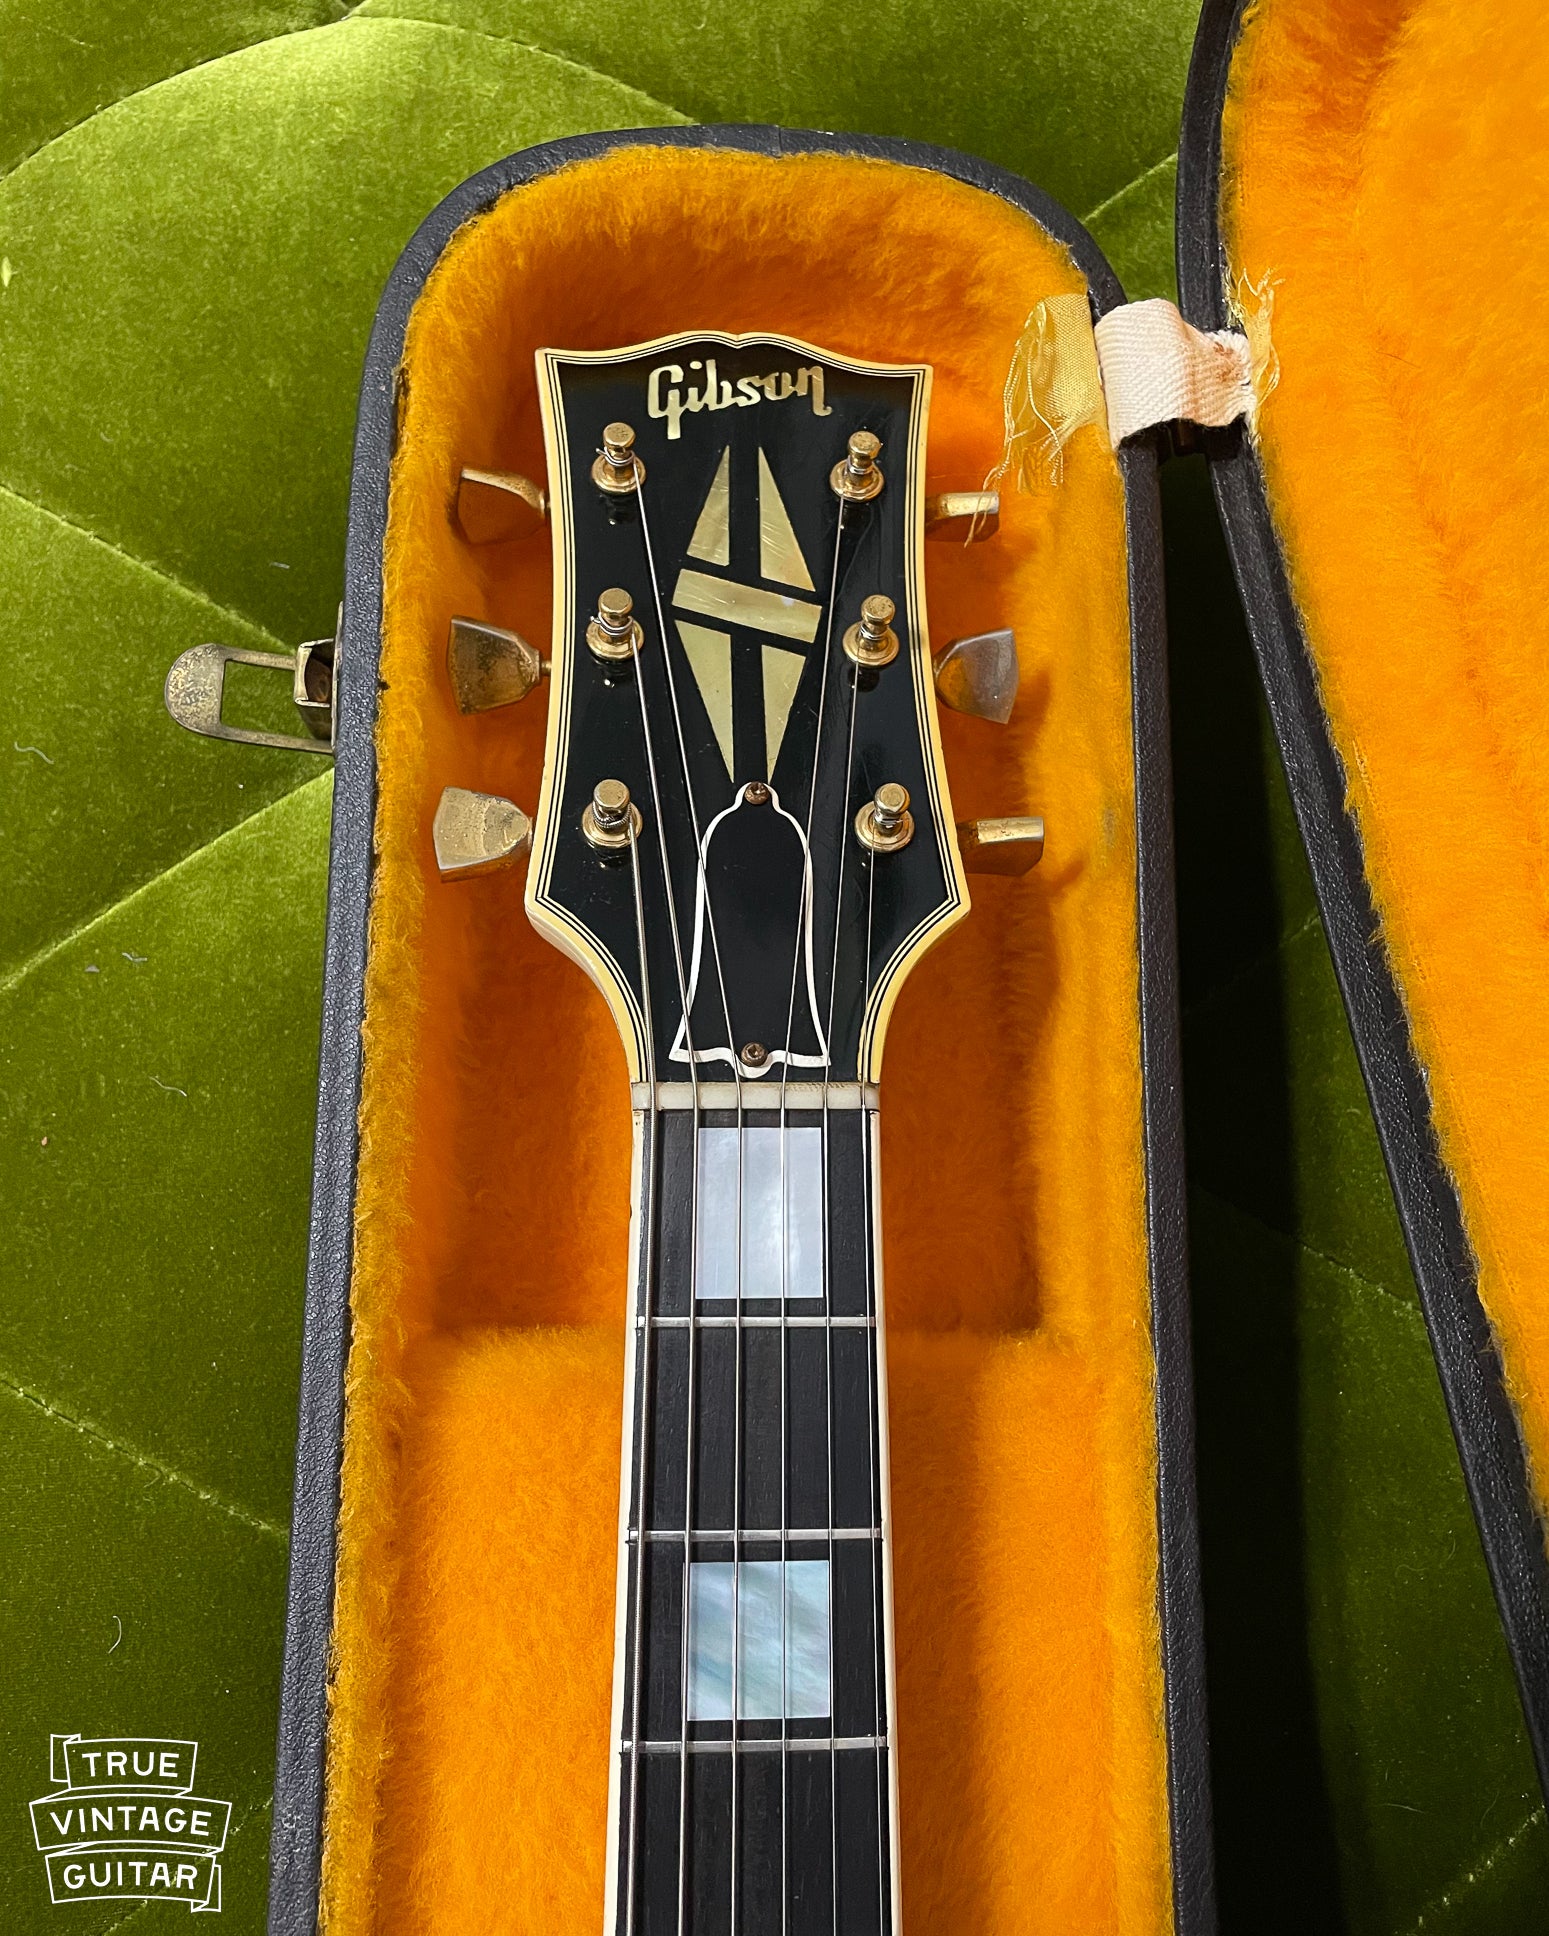 1964 Gibson SG Custom neck with pear inlay